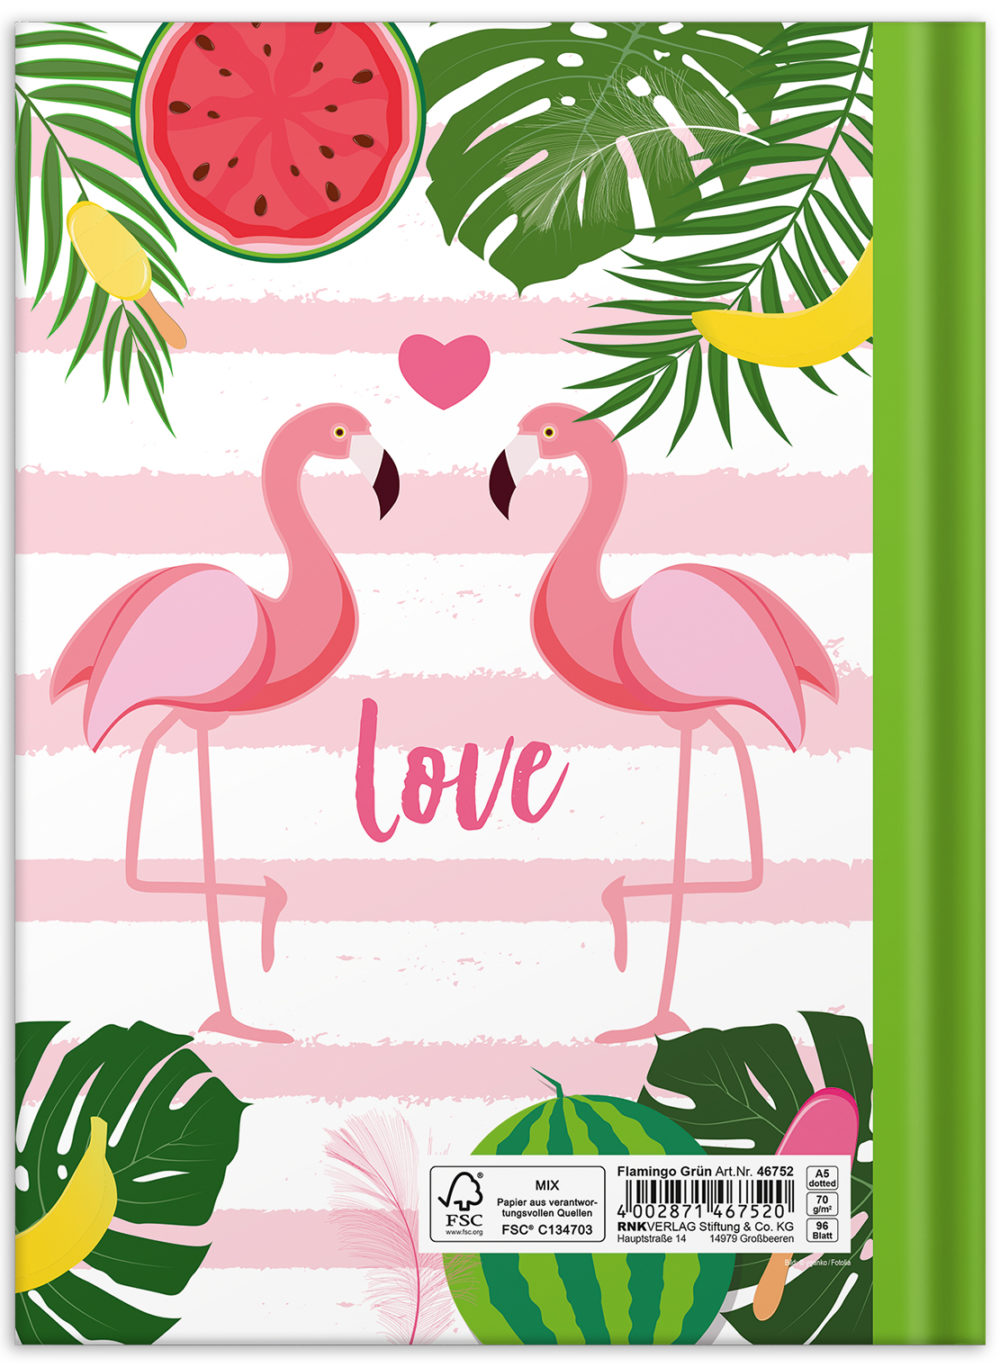 Notizbuch "Flamingo grün" Rückseite mit zwei Flamingos